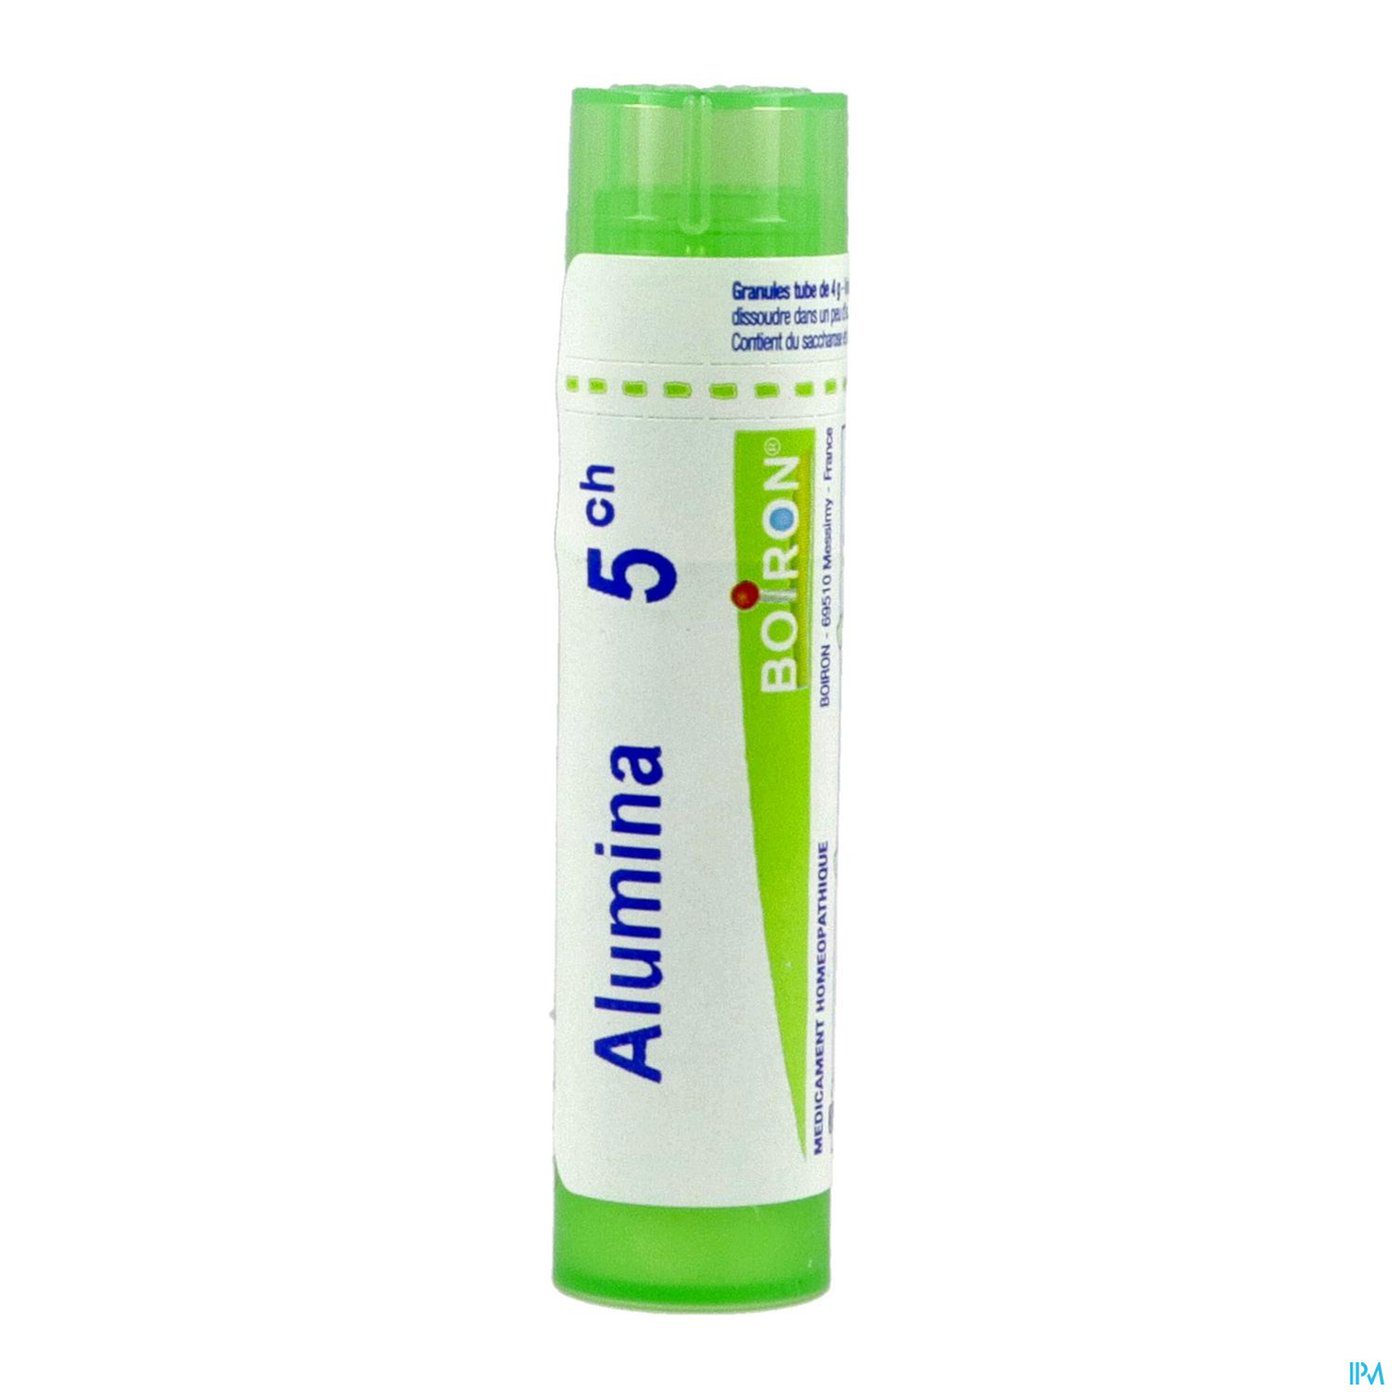 Alumina 5ch Gr 4g Boiron packshot